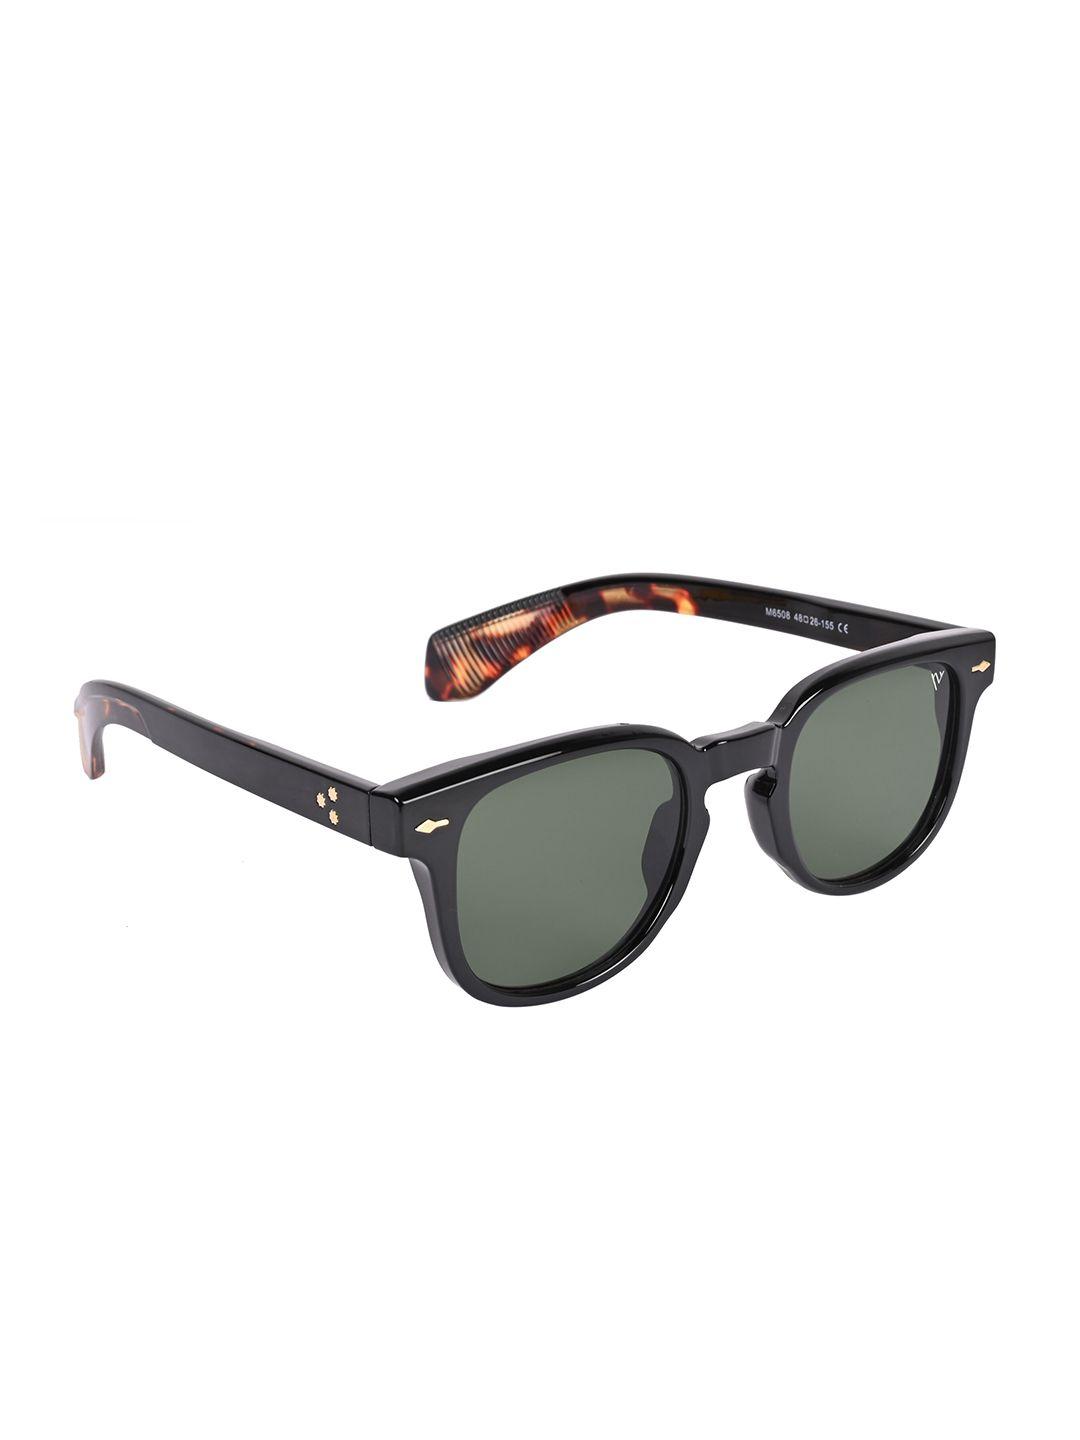 voyage women green lens & black wayfarer sunglasses with uv protected lens